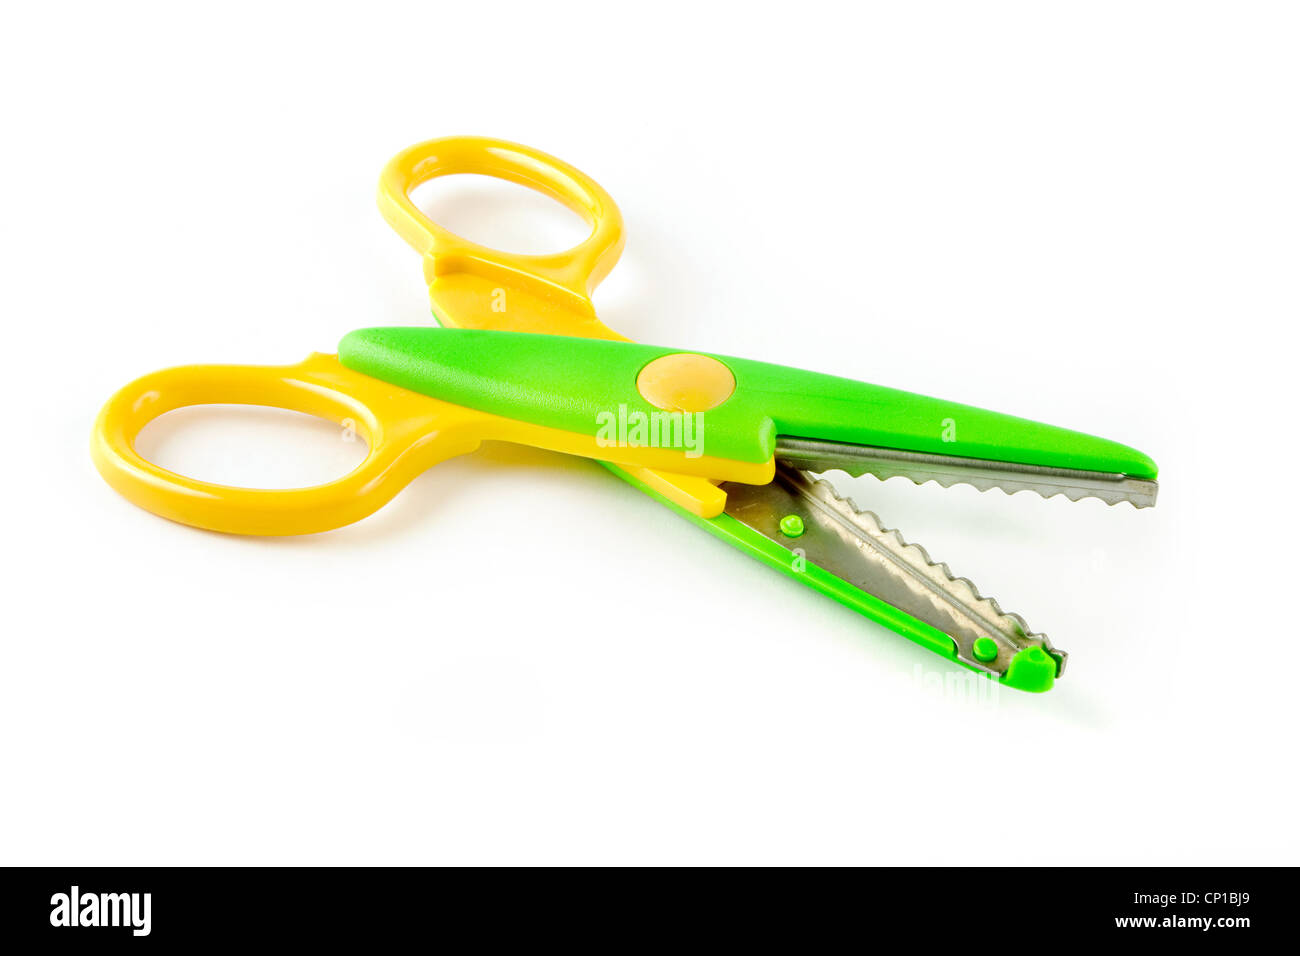 Kid safe scissors stock photo. Image of safety, school - 38352122